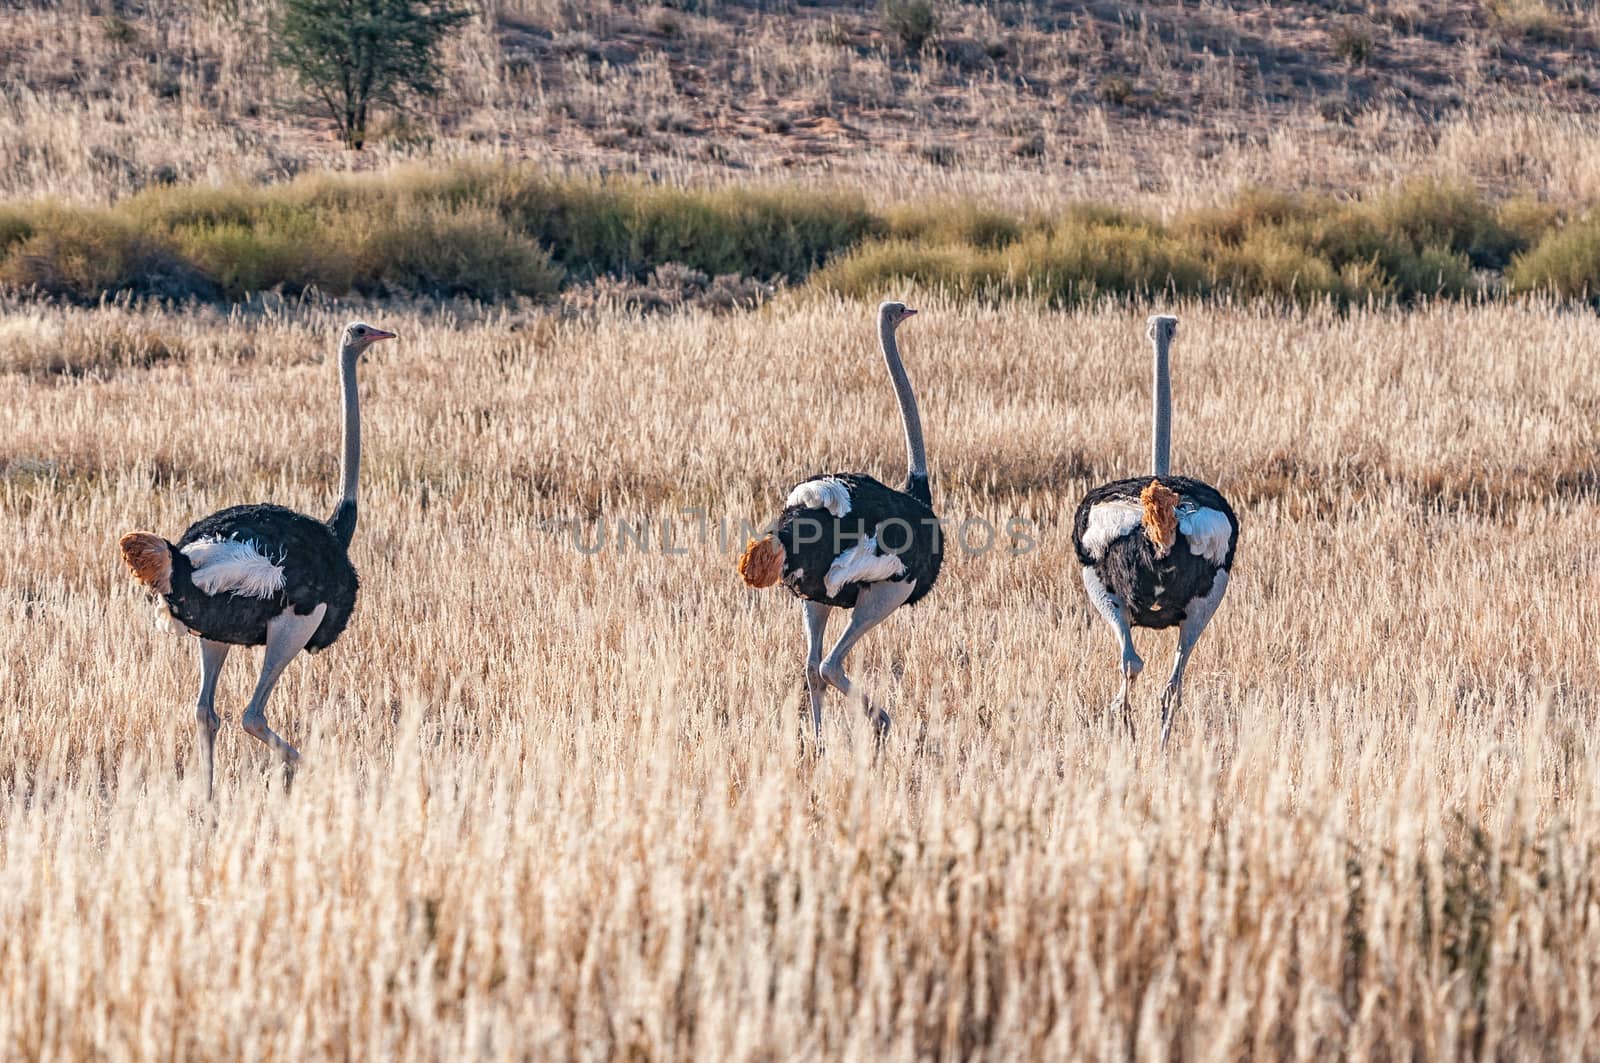 Three male Ostriches, Struthio camelus, running in grass